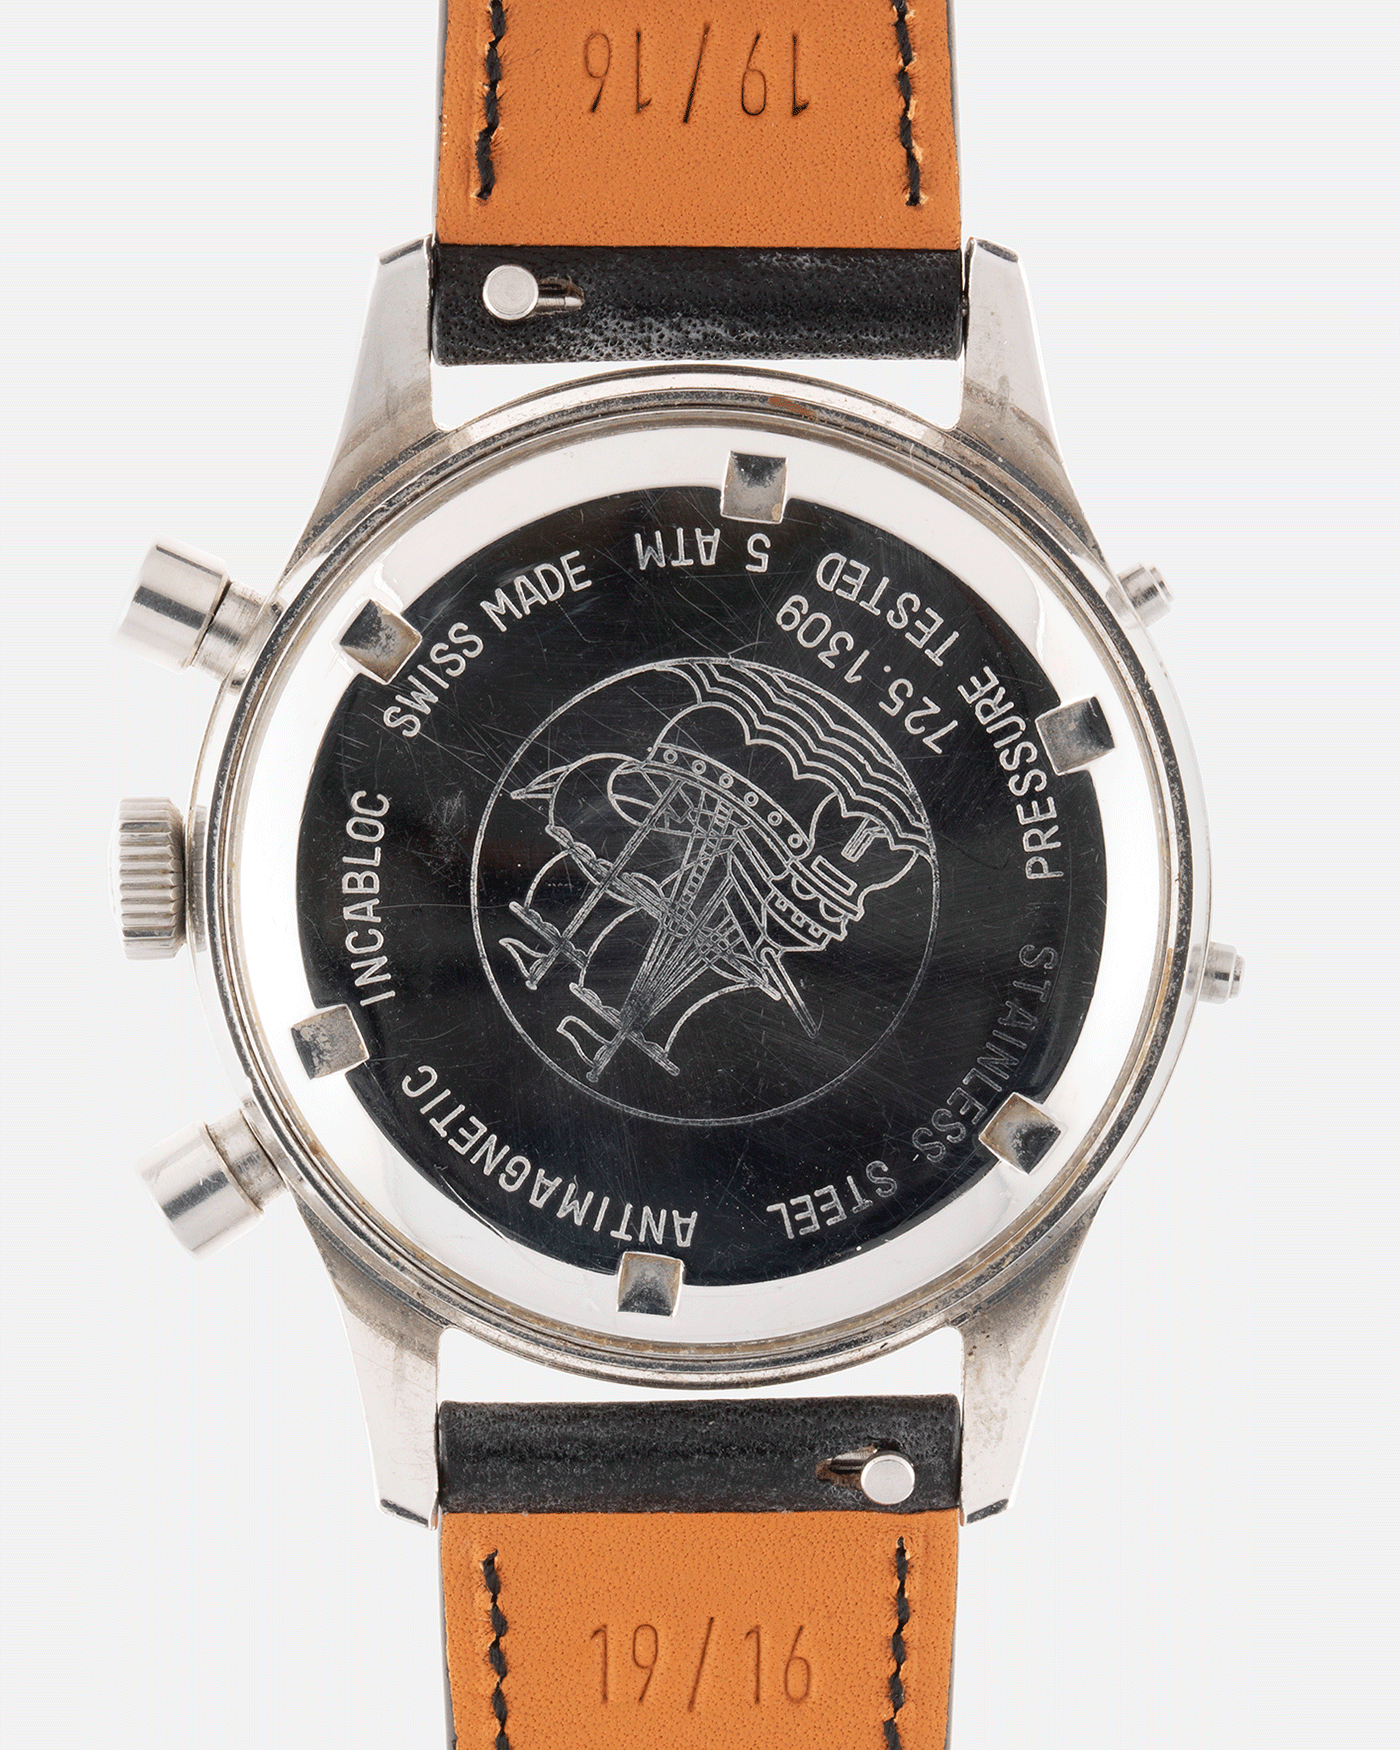 Brand: Wakmann Year: 1970’s Model: Triple Calendar Chronograph Serial Number: 71.1309.70 Material: Stainless Steel Movement: Valjoux 723 Case Diameter: 39mm Lug Width: 20mm Bracelet/Strap: Nostime Black Calf